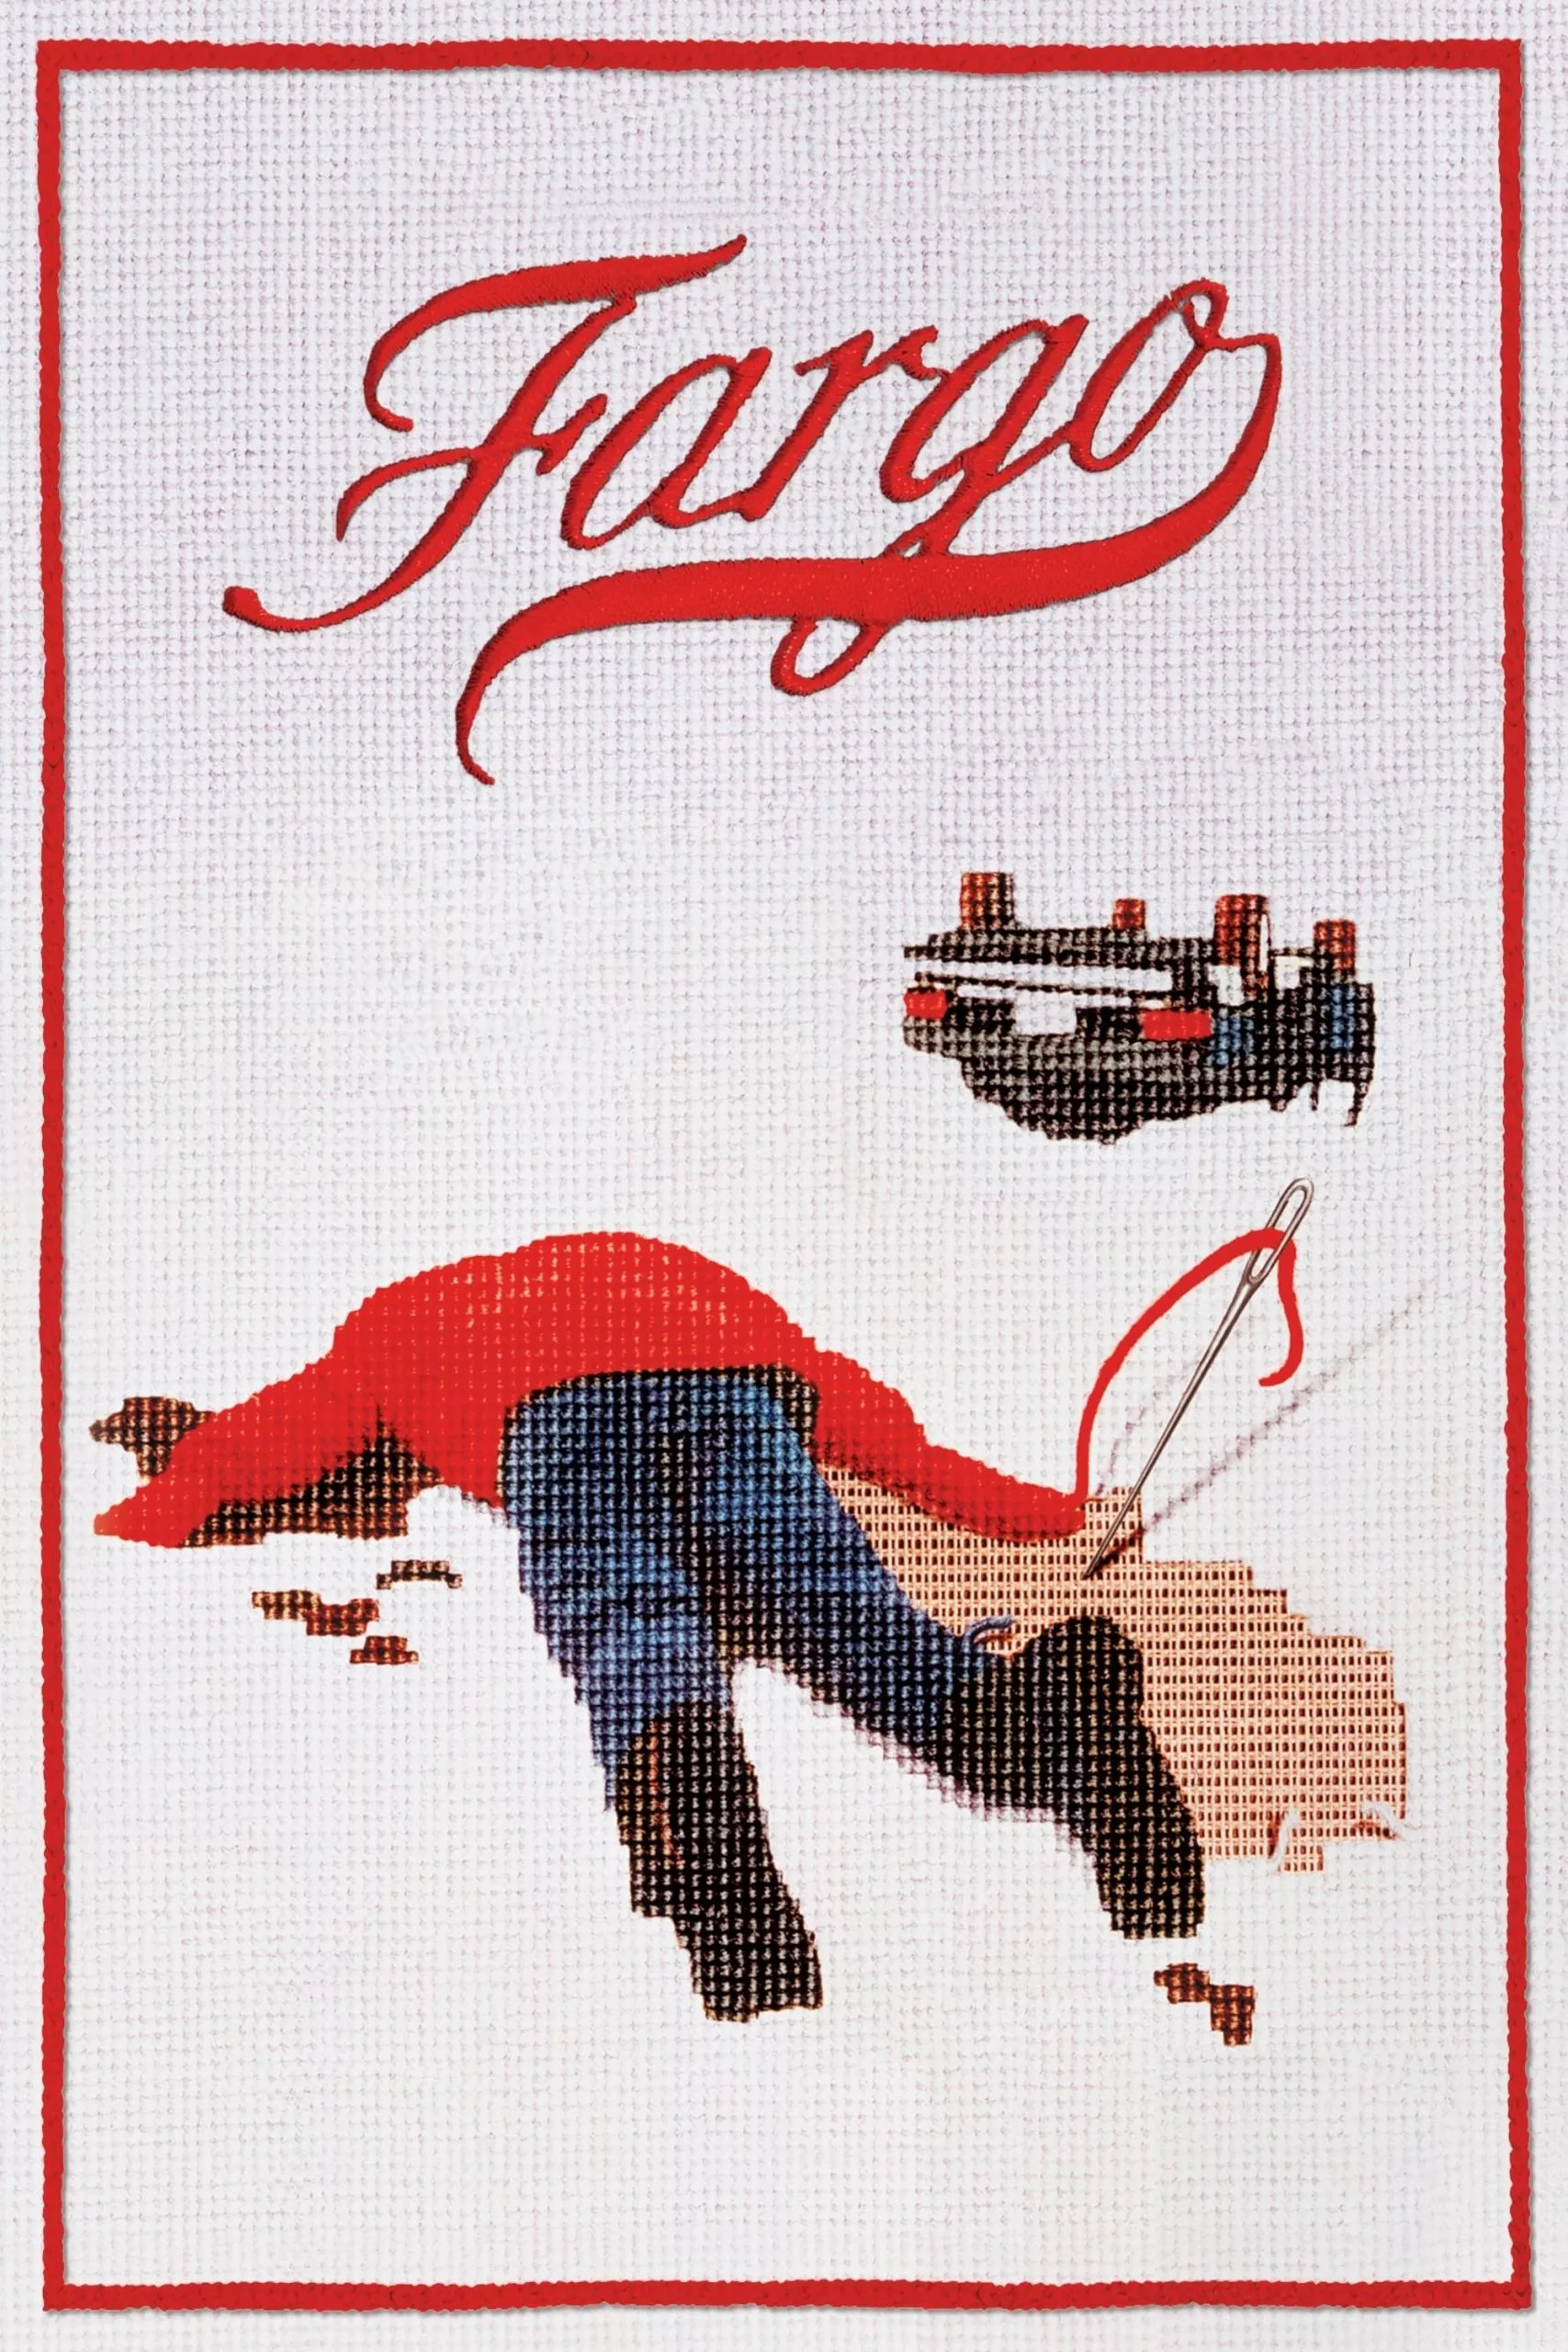 Fargo (1996) เงินร้อน